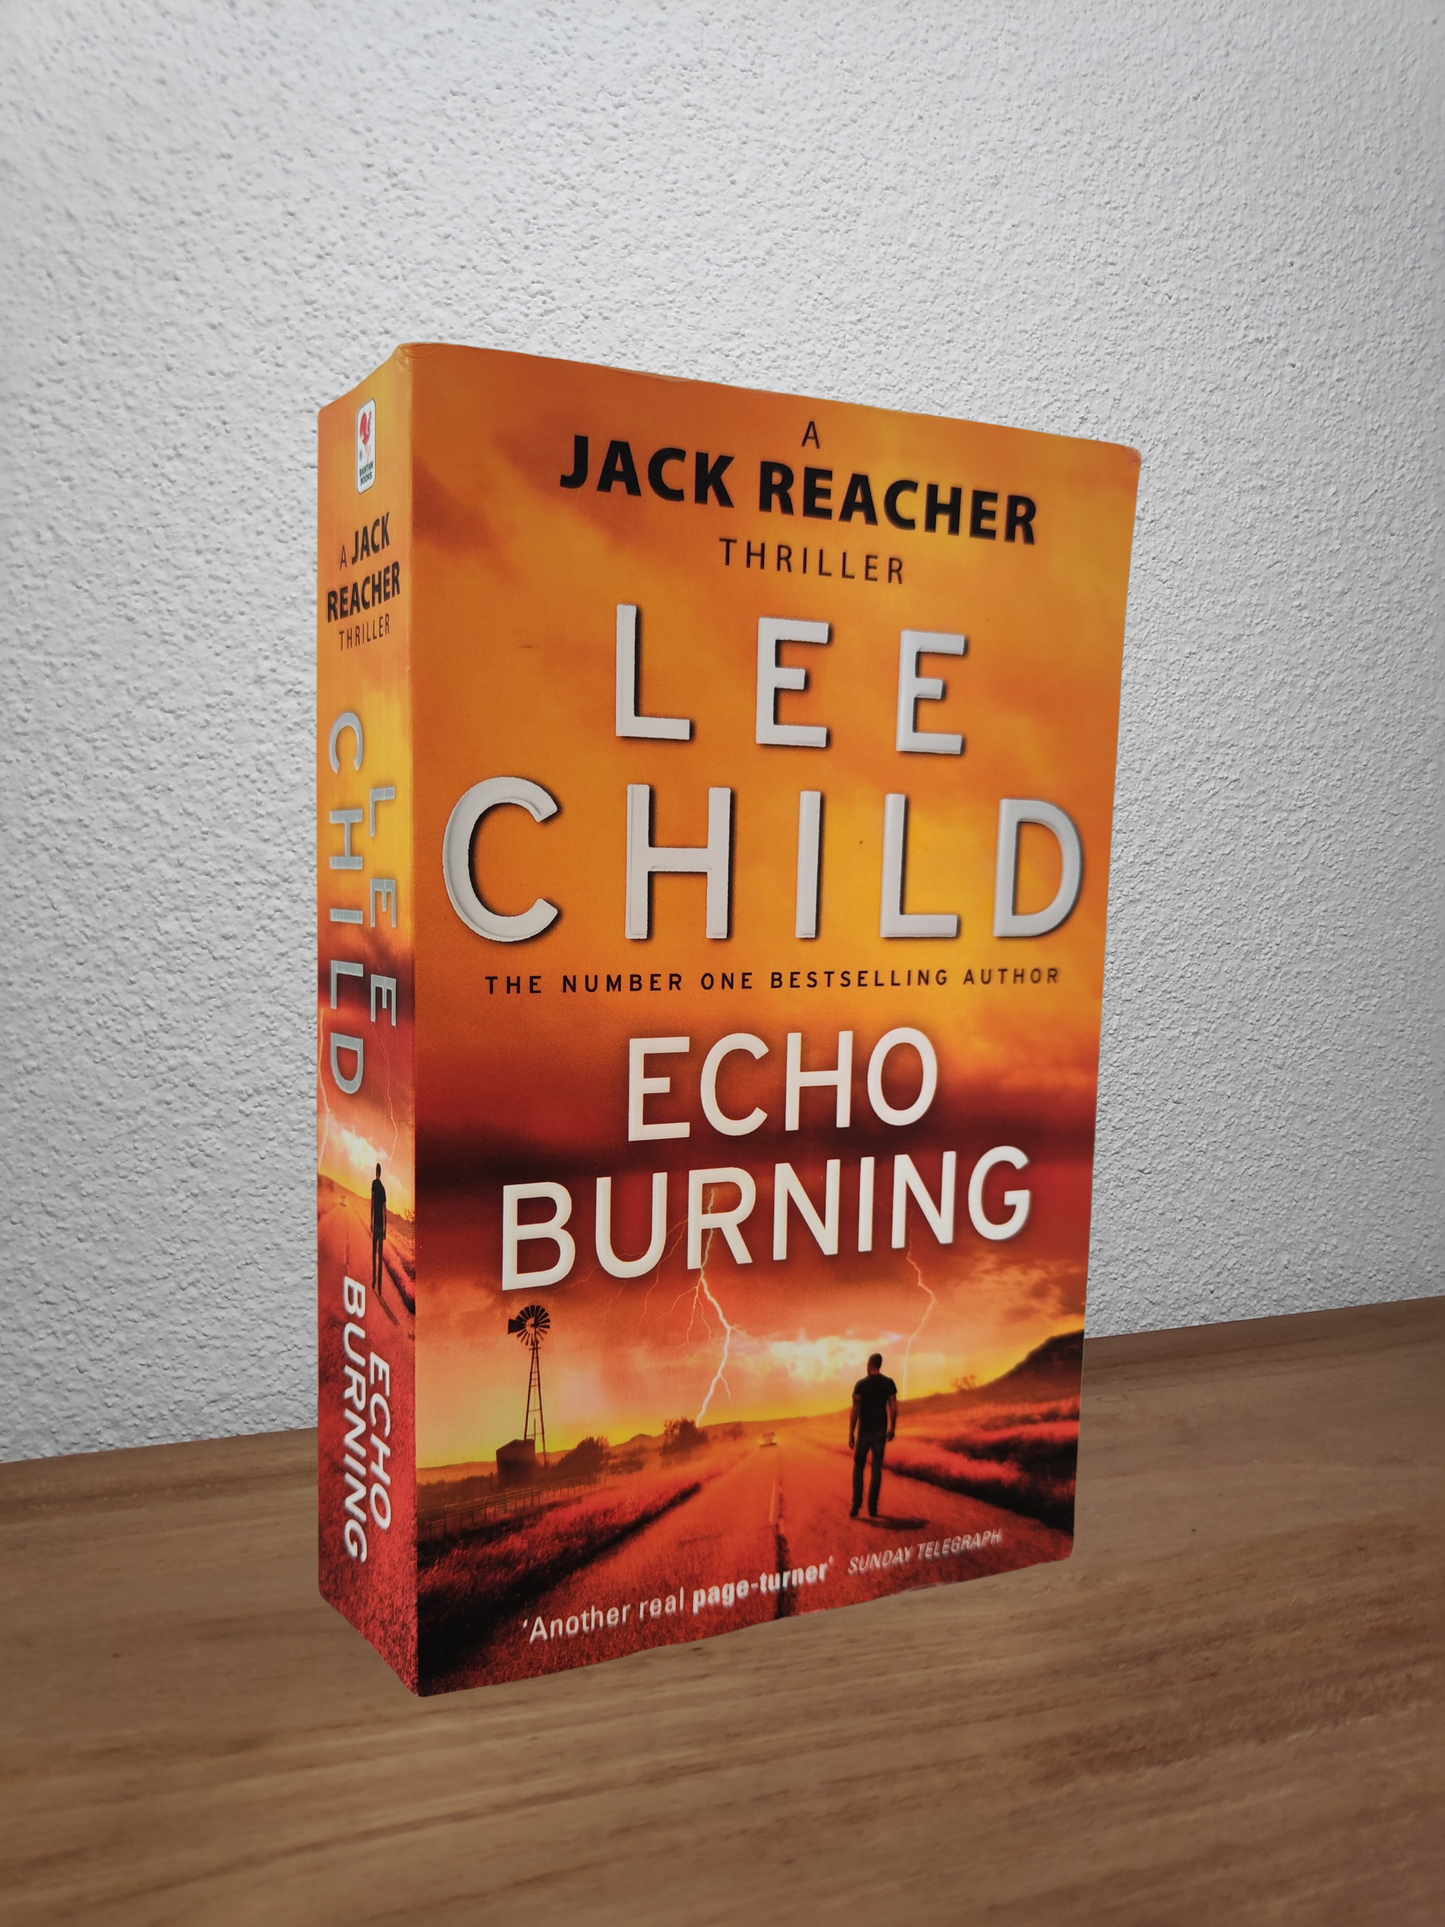 Lee Child - Echo Burning (Jack Reacher #5)